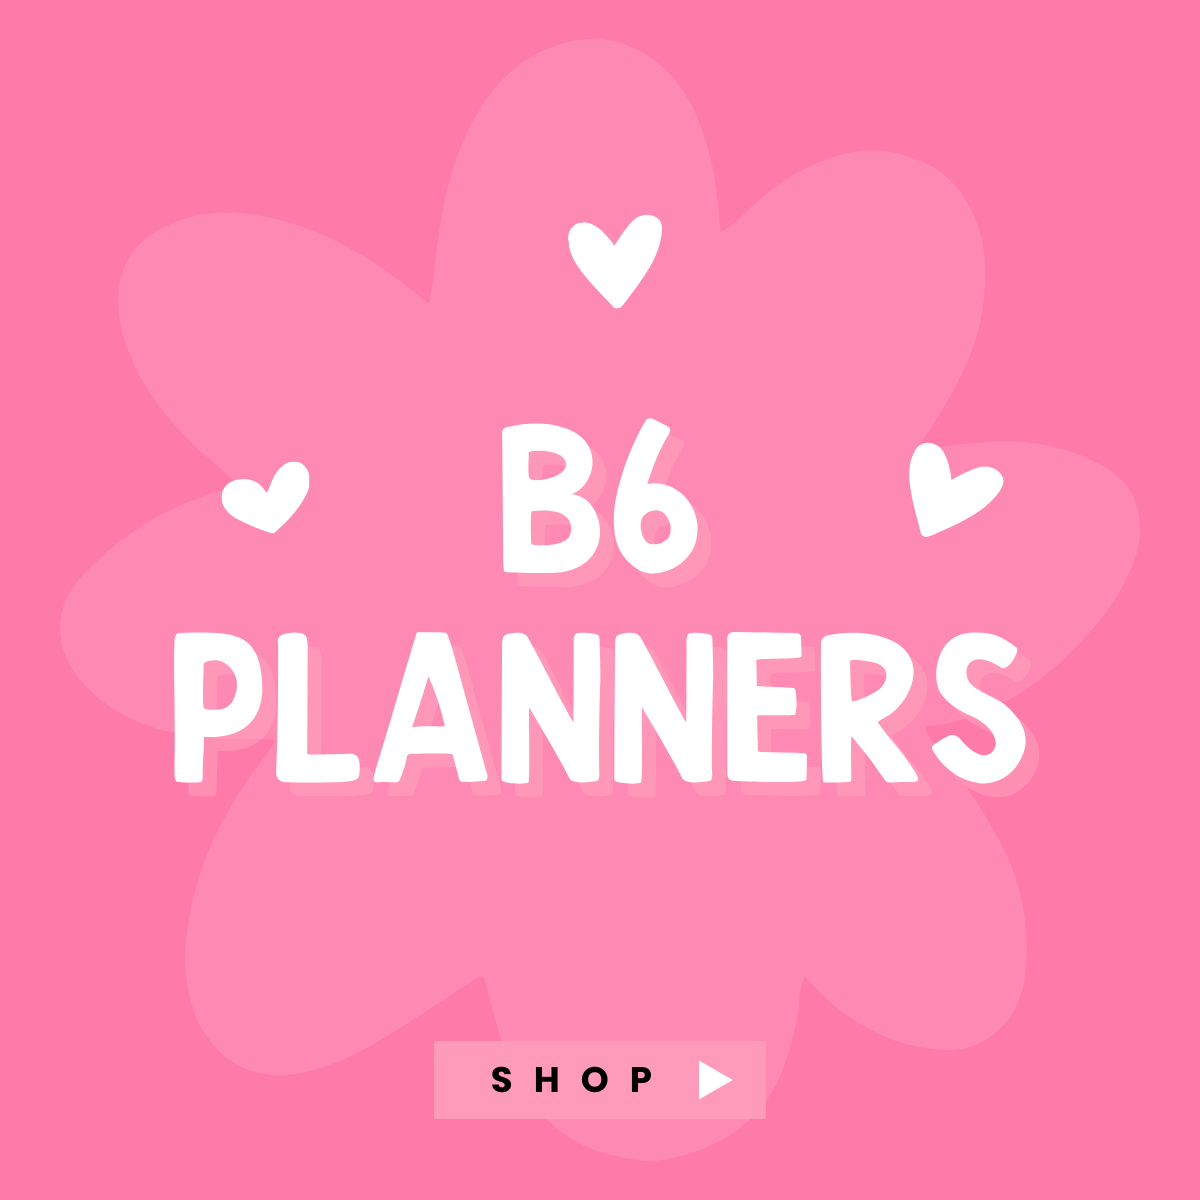 B6 Planners